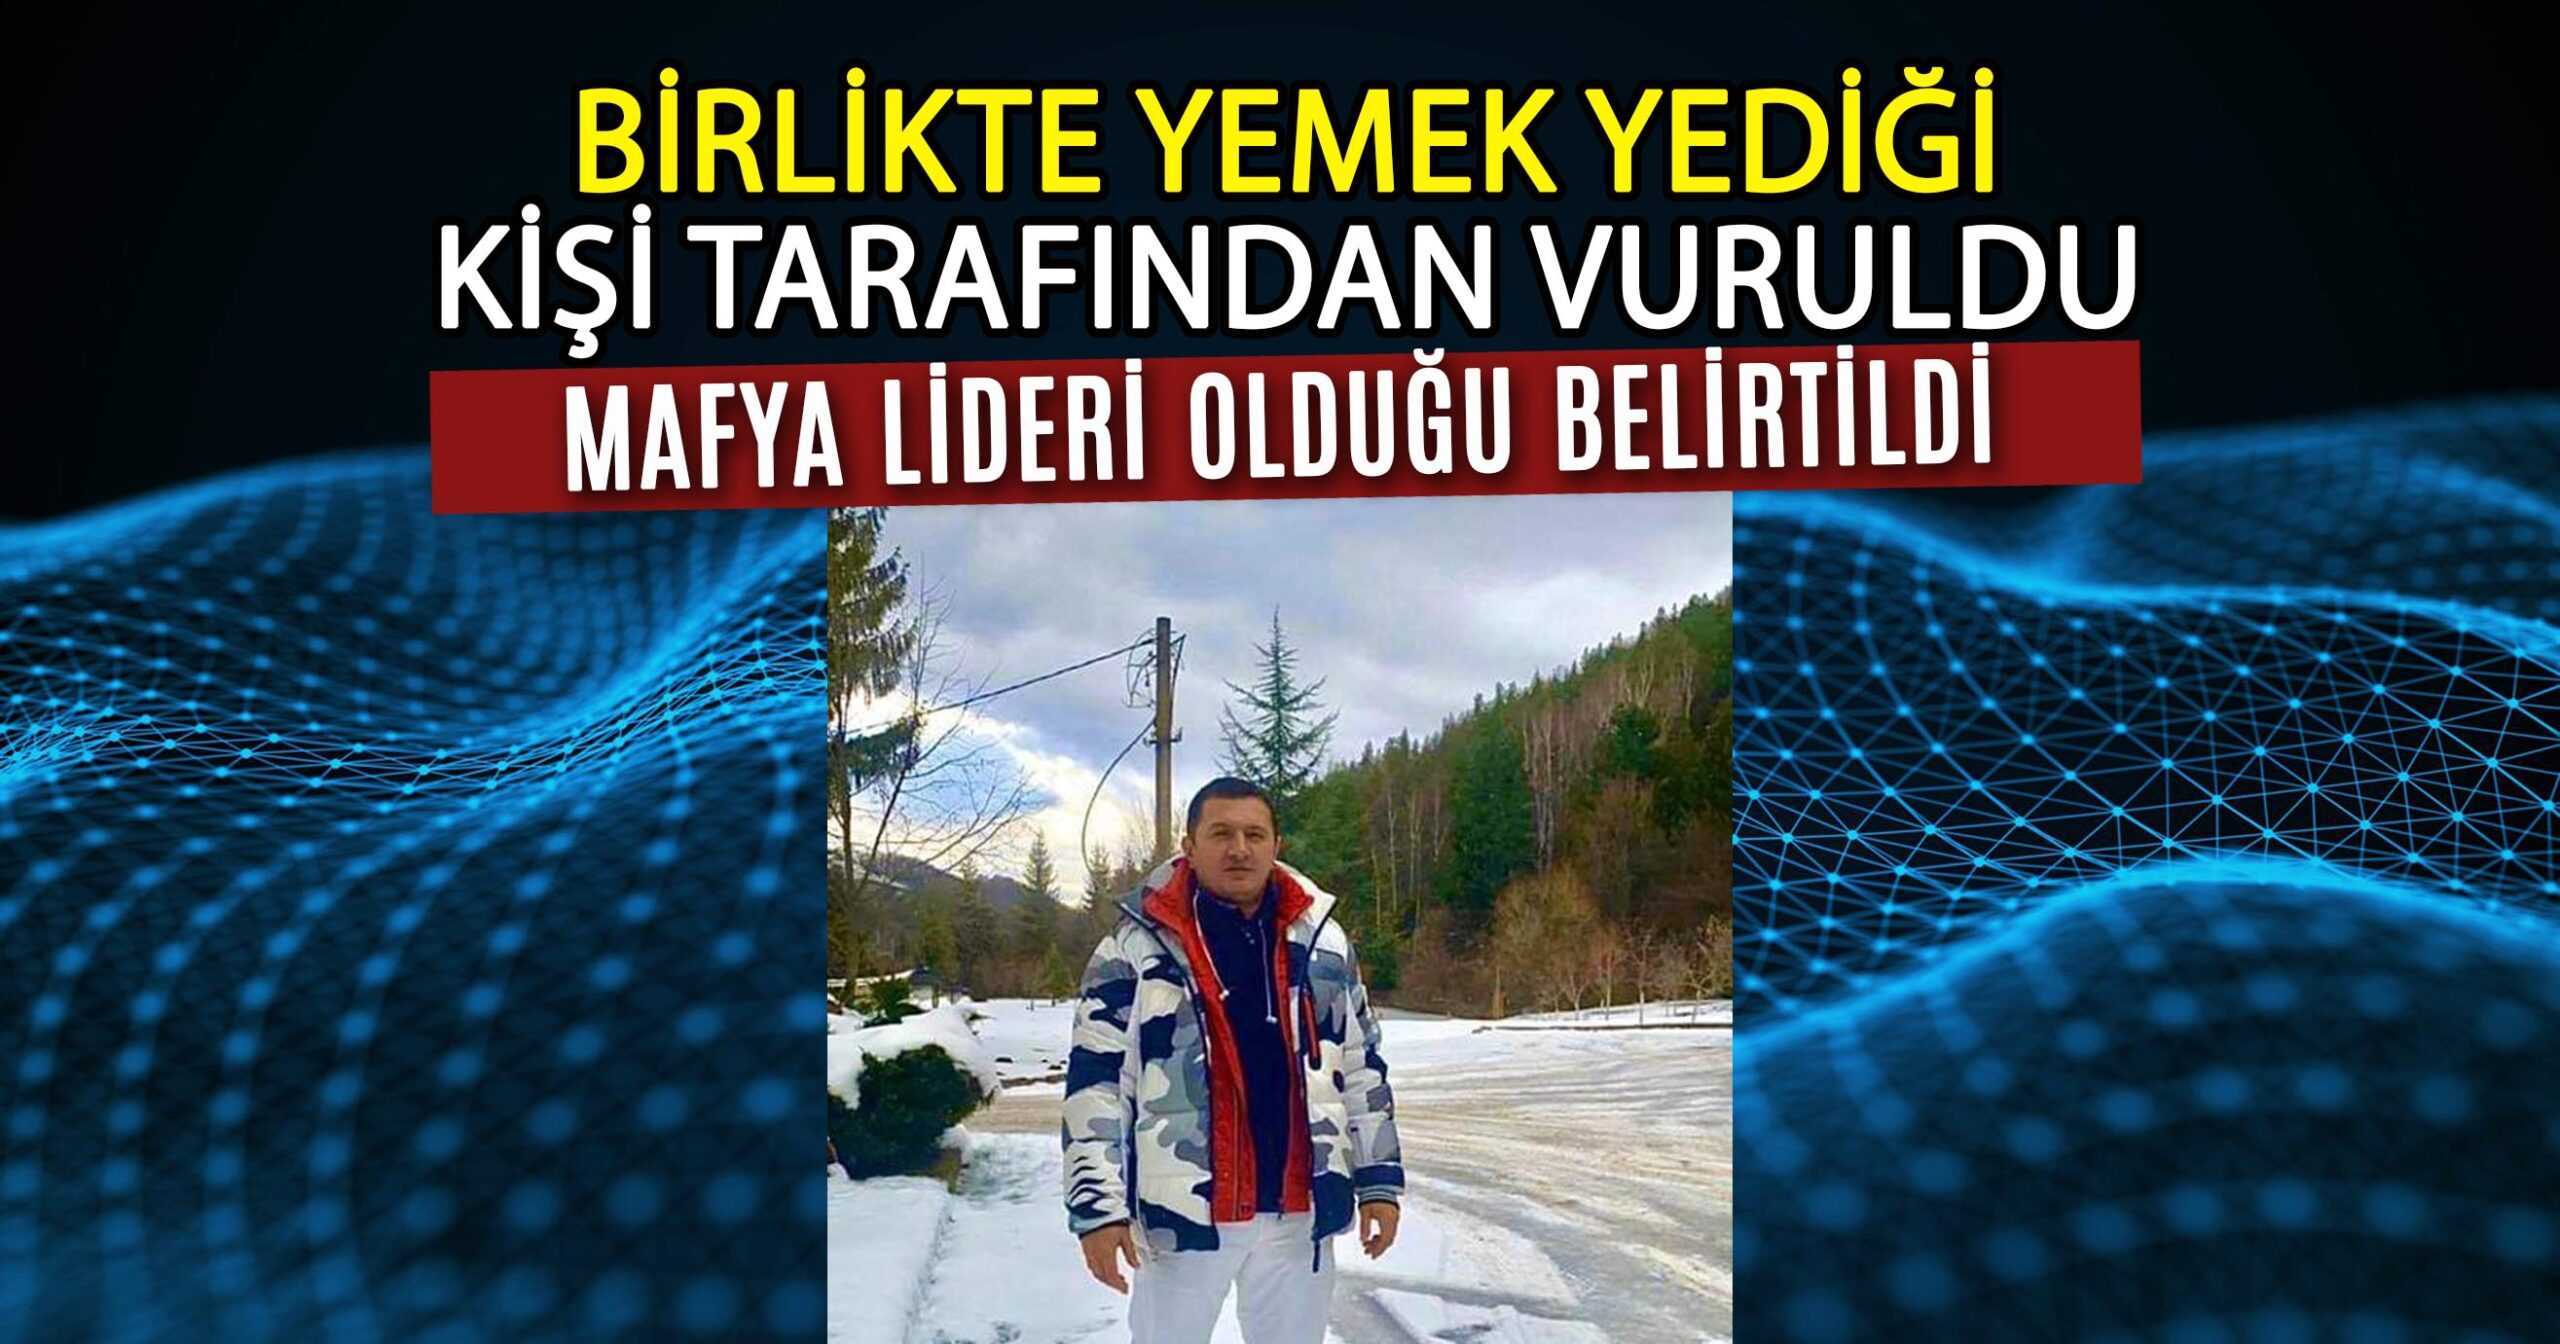 AZERBAYCAN UYRUKLU ADAMIN FECİ ÖLÜMÜ!